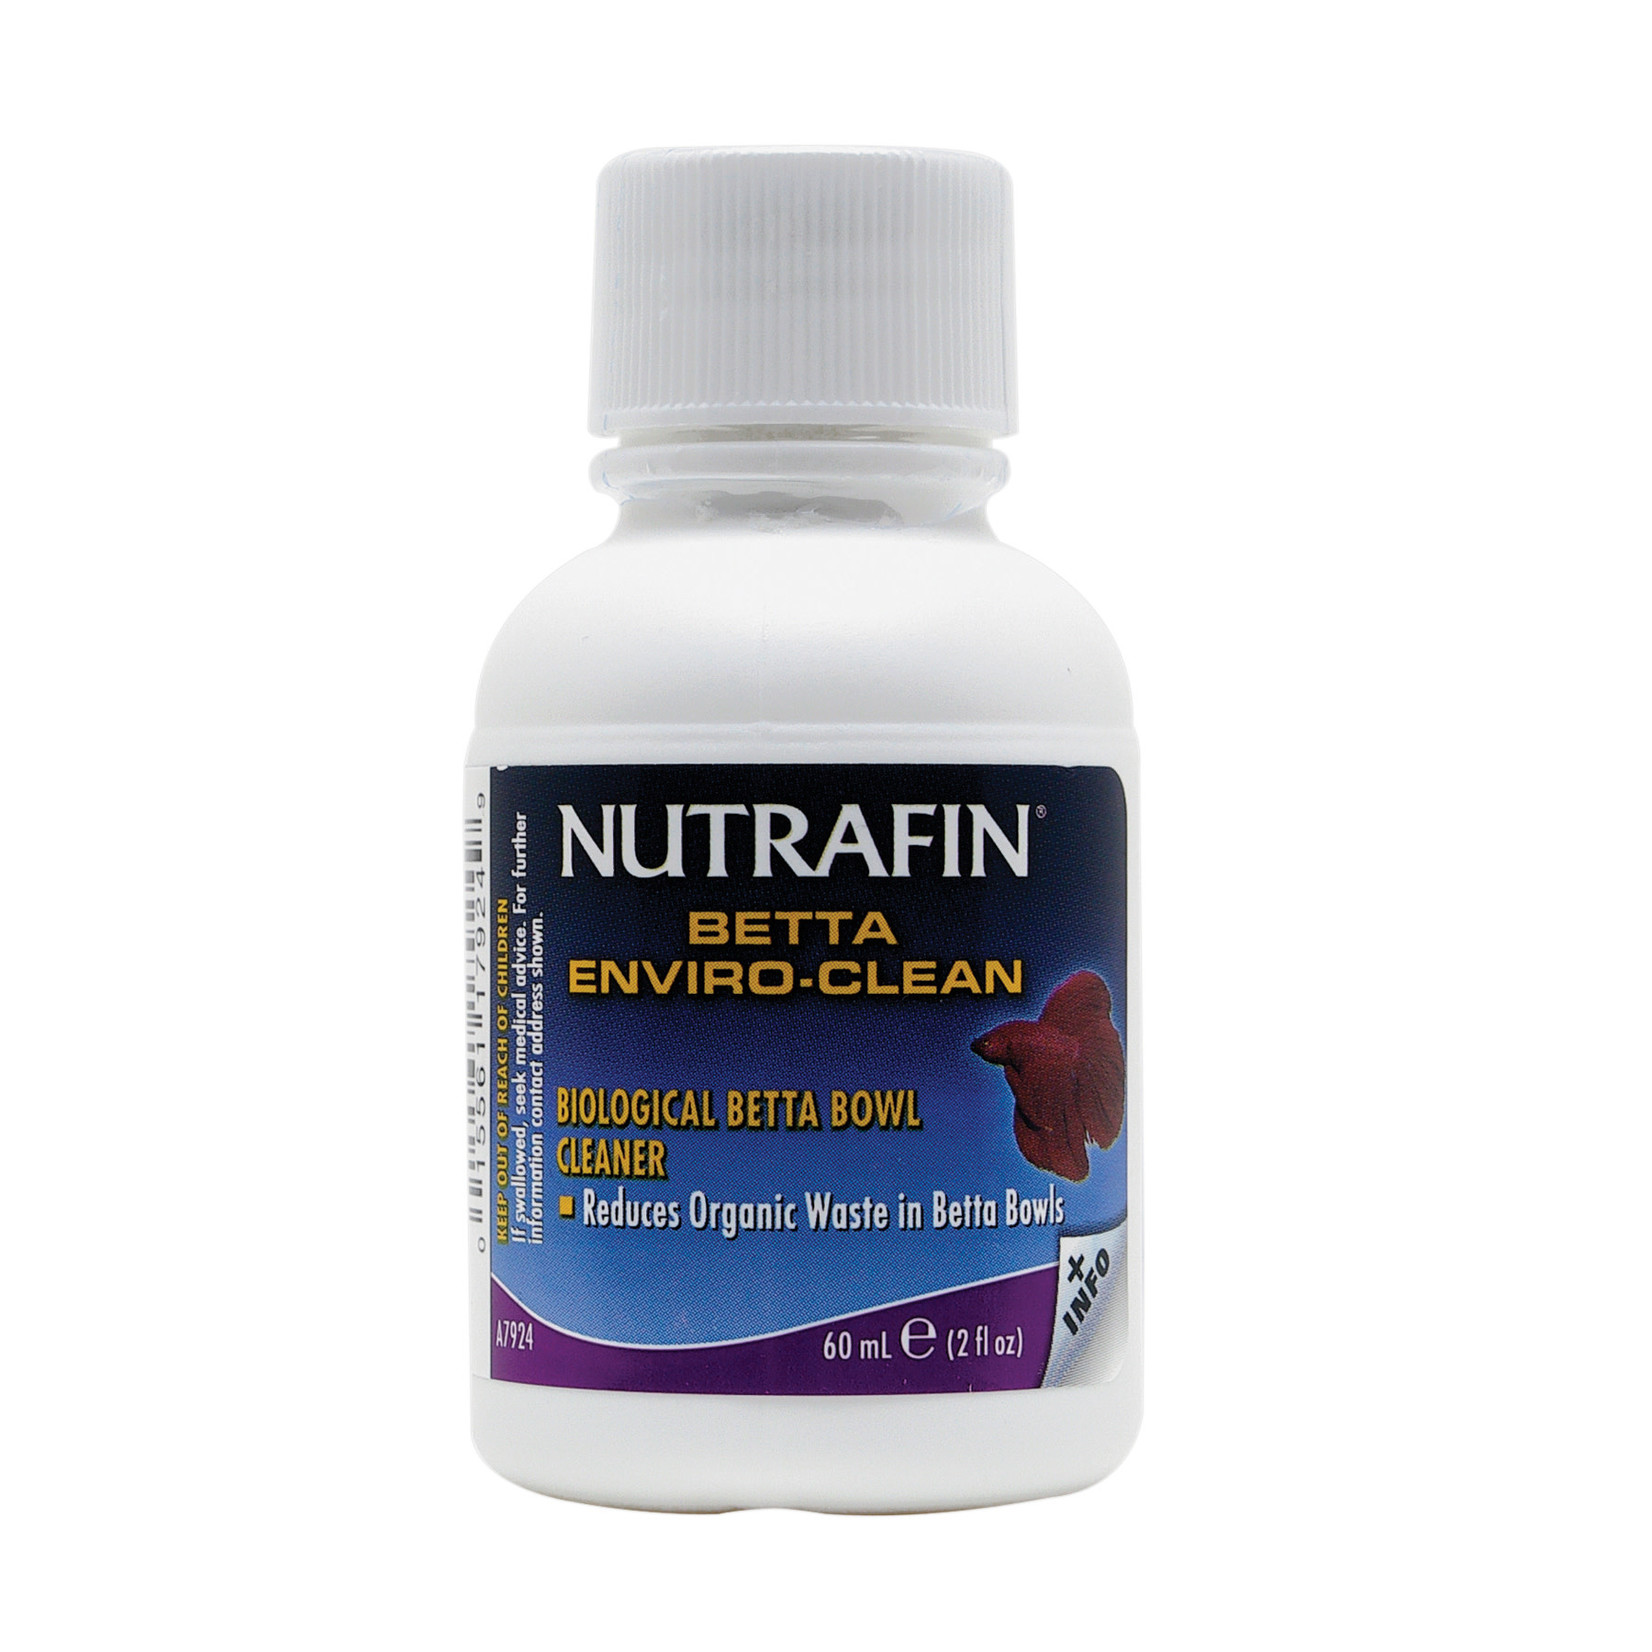 NUTRAFIN Nutrafin Betta Enviro-Clean Biological Betta Bowl Cleaner - 2 fl oz (60 ml)